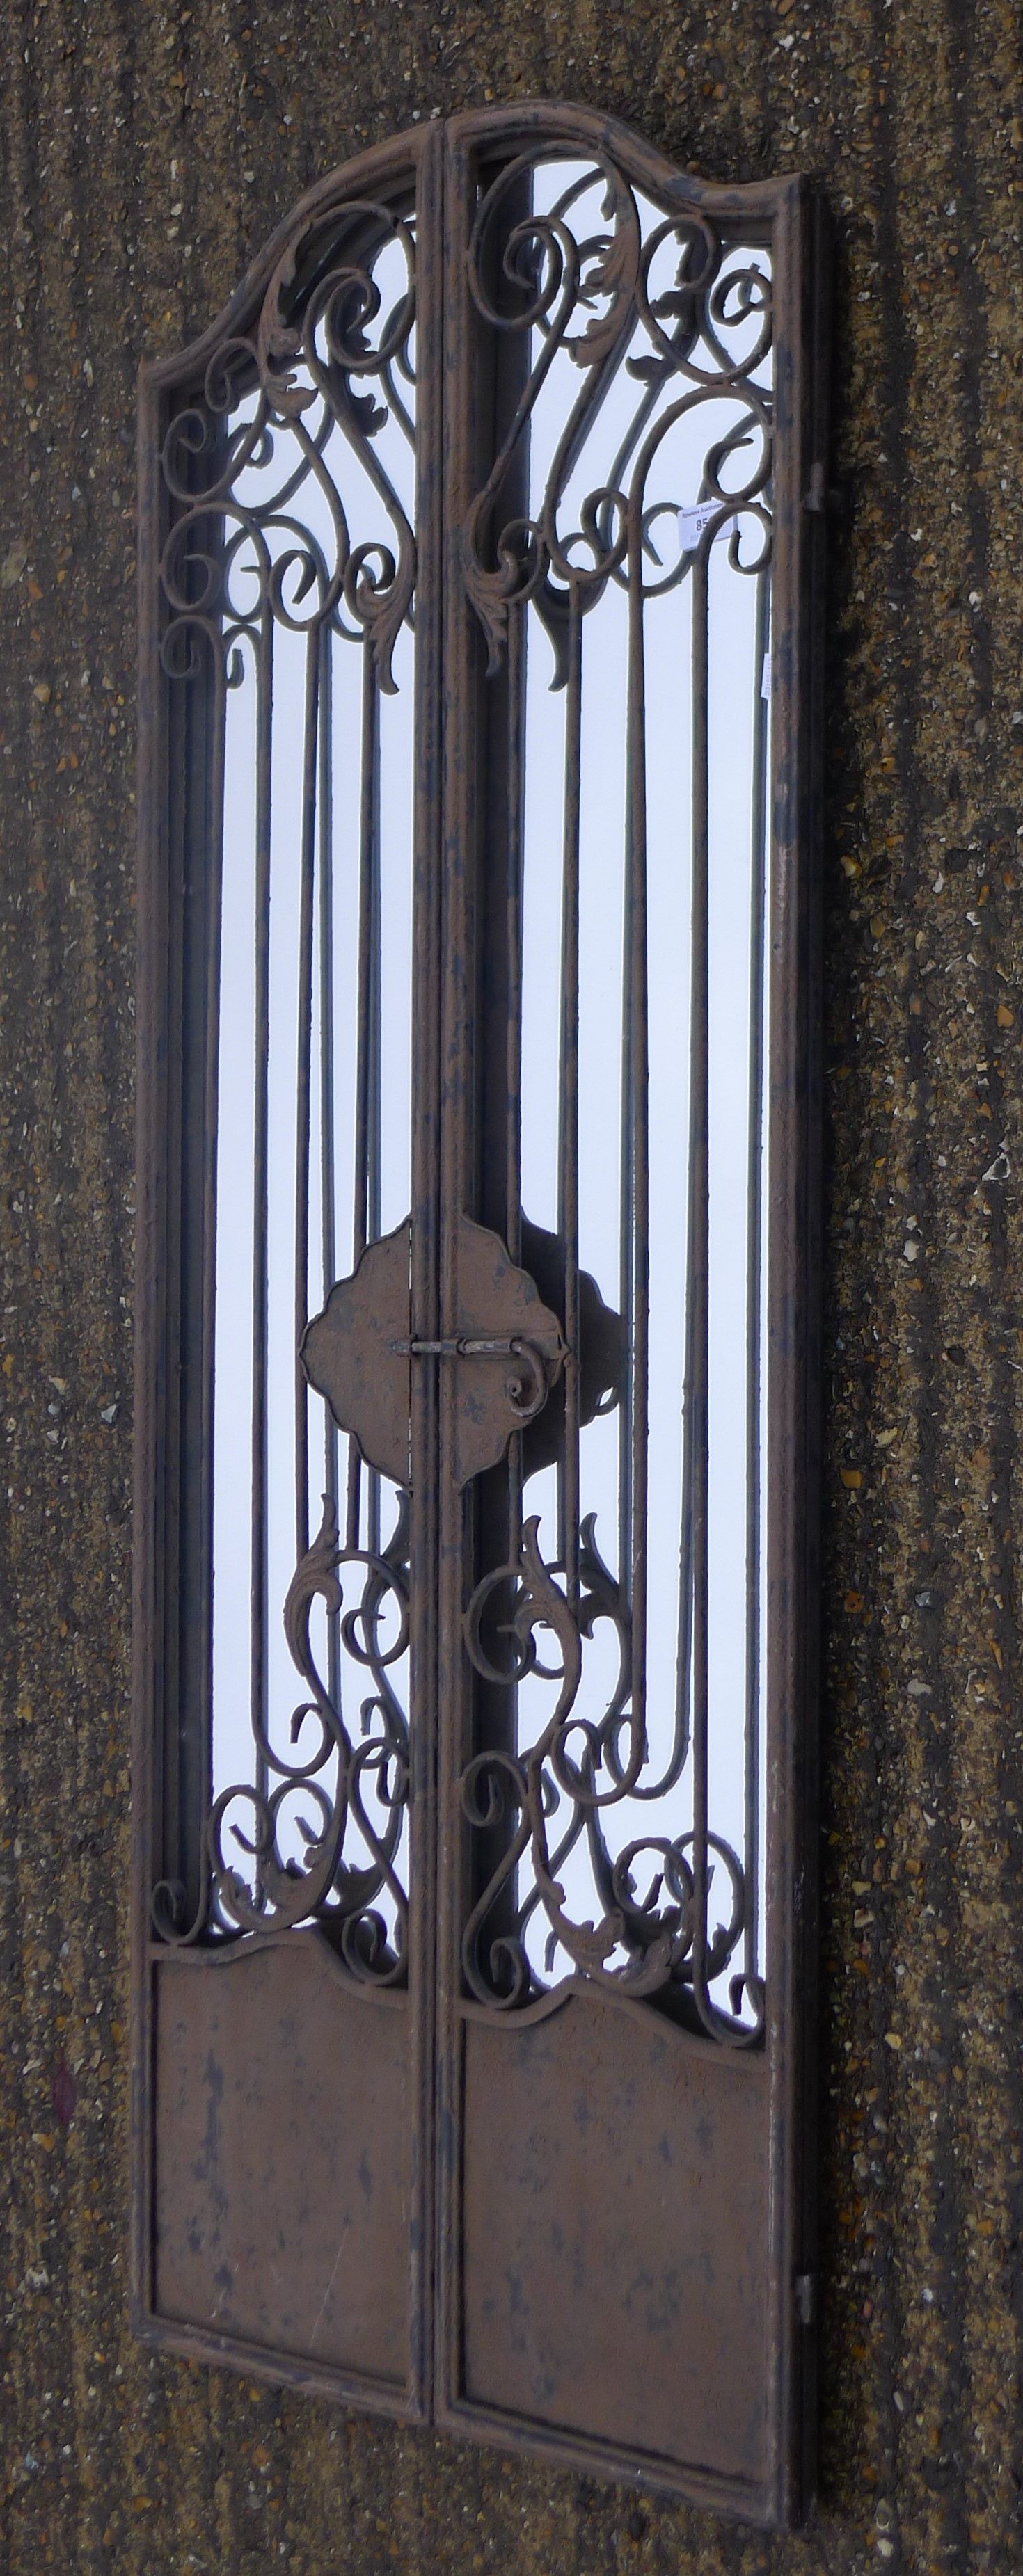 A gate form mirror. 128 cm high.